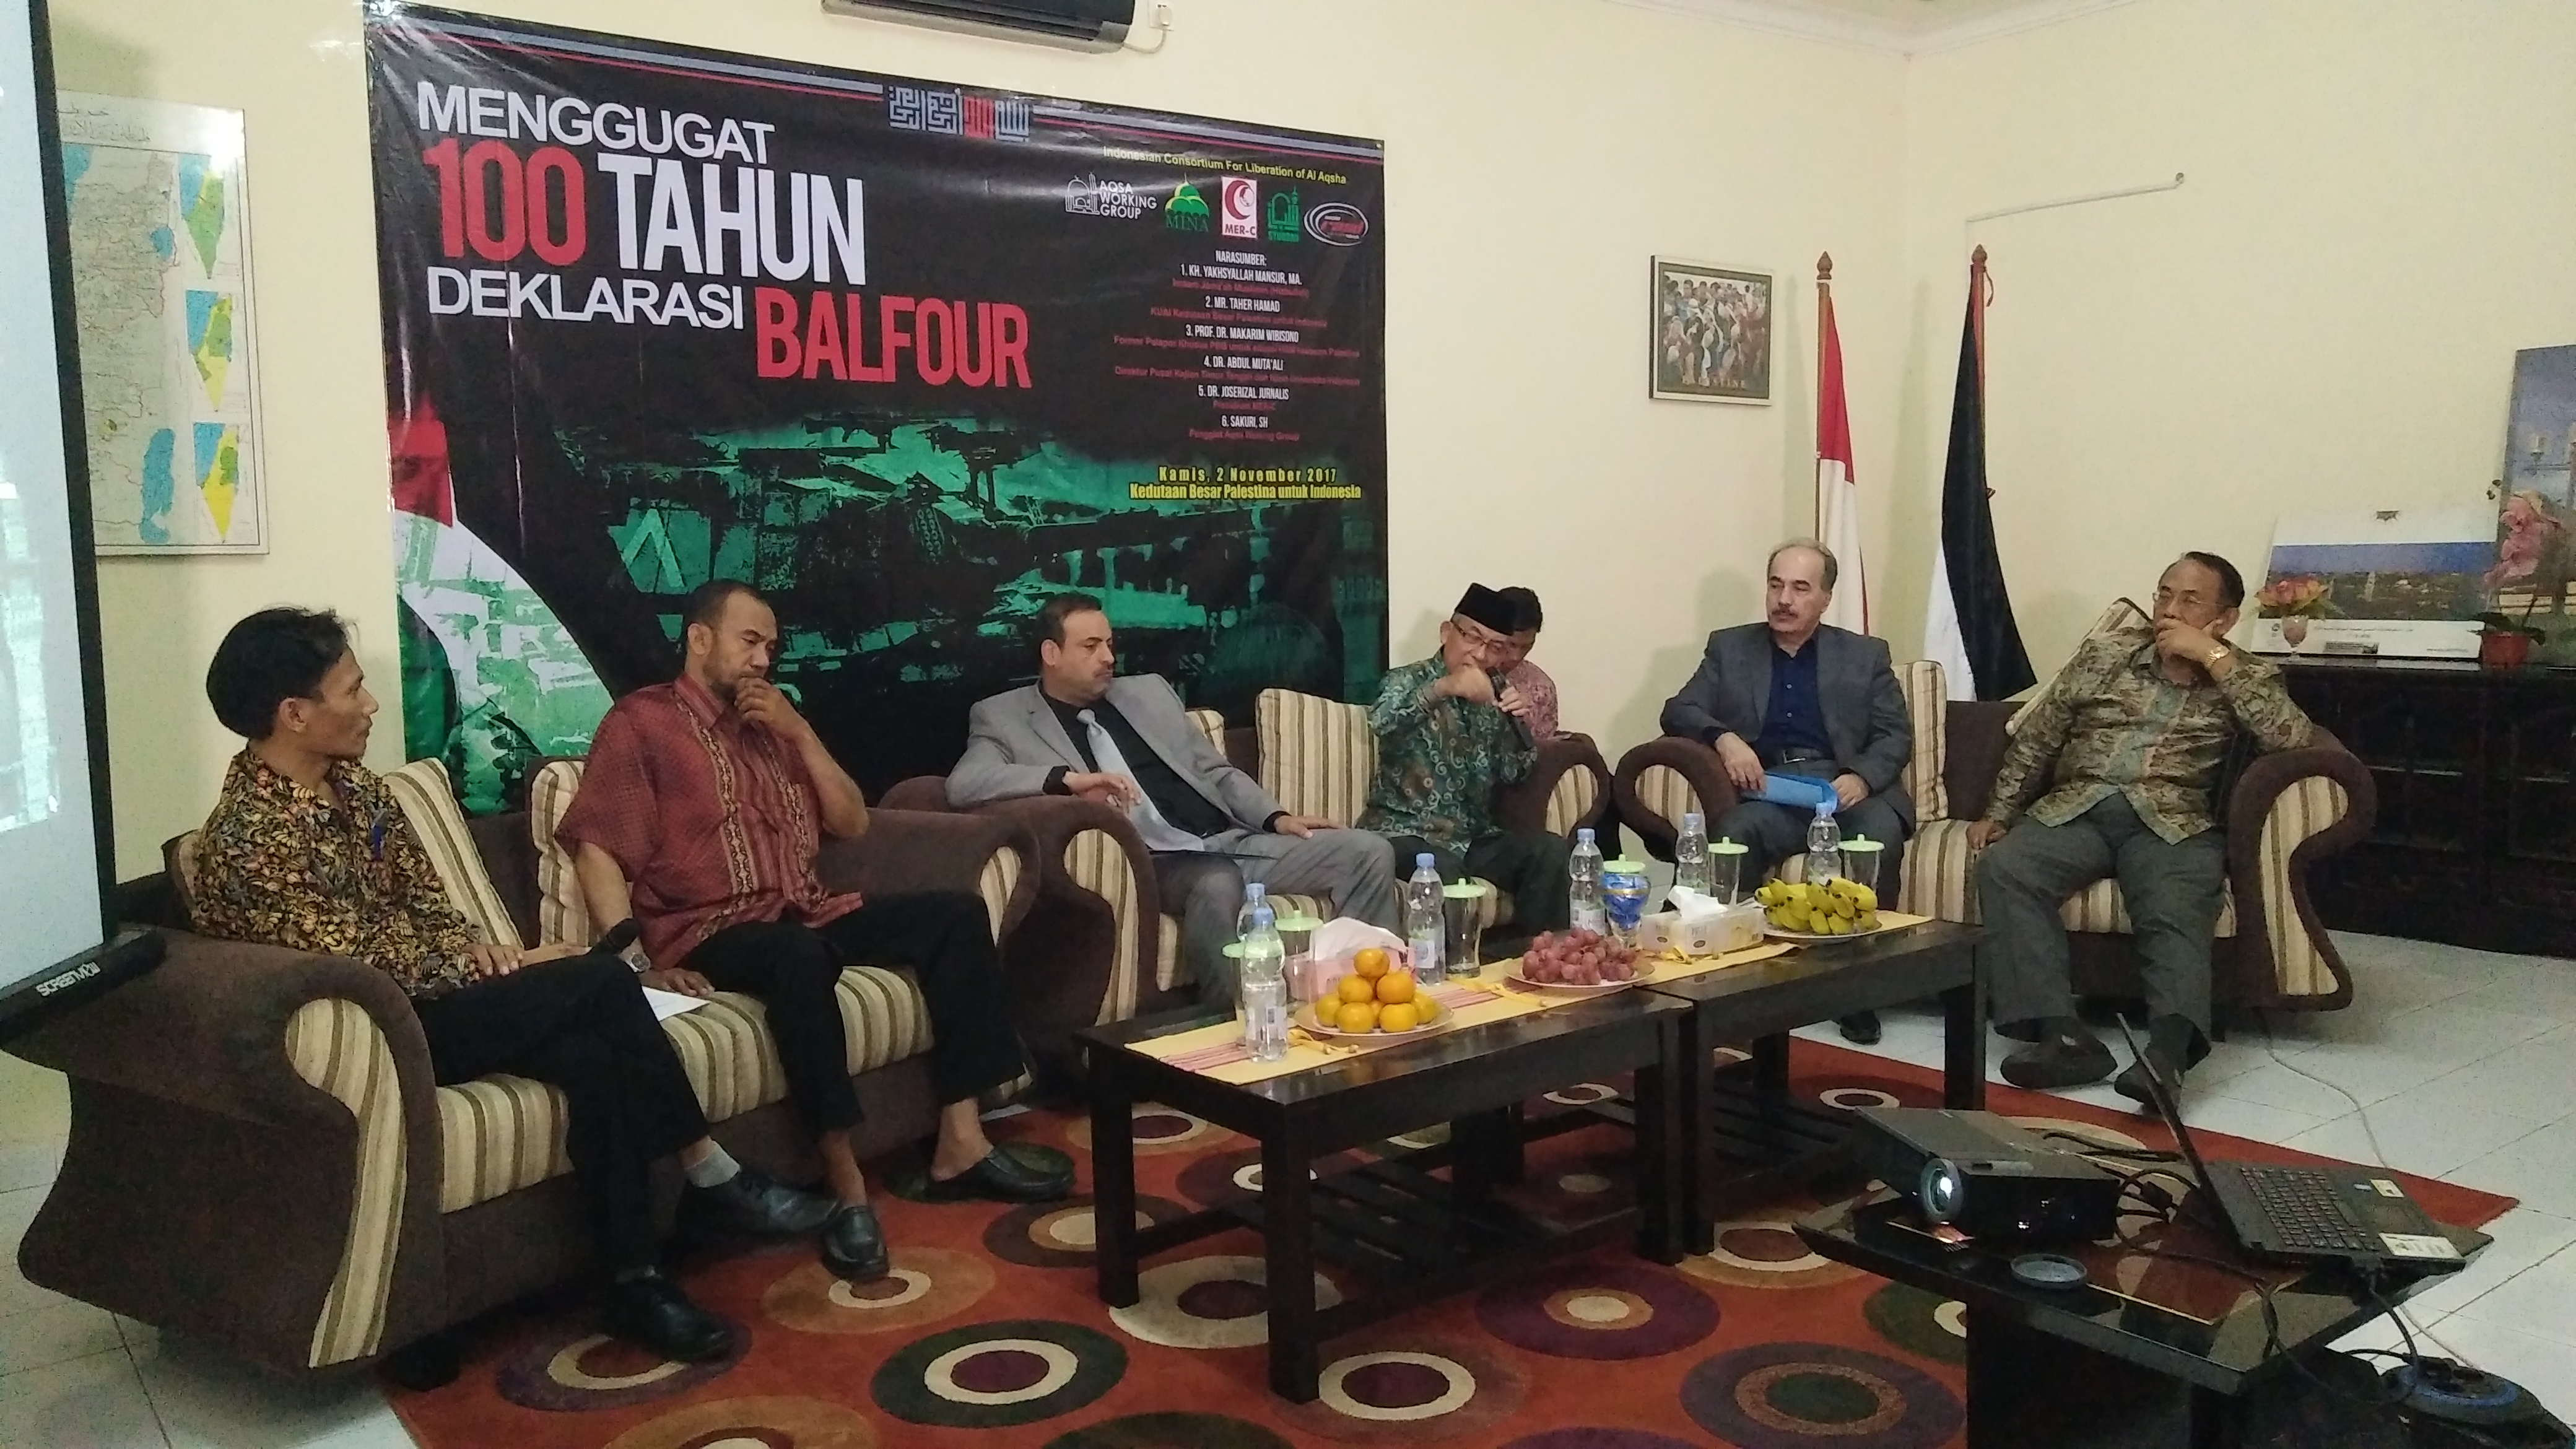 Aktivis Indonesia Gugat 100 Tahun Deklarasi Balfour